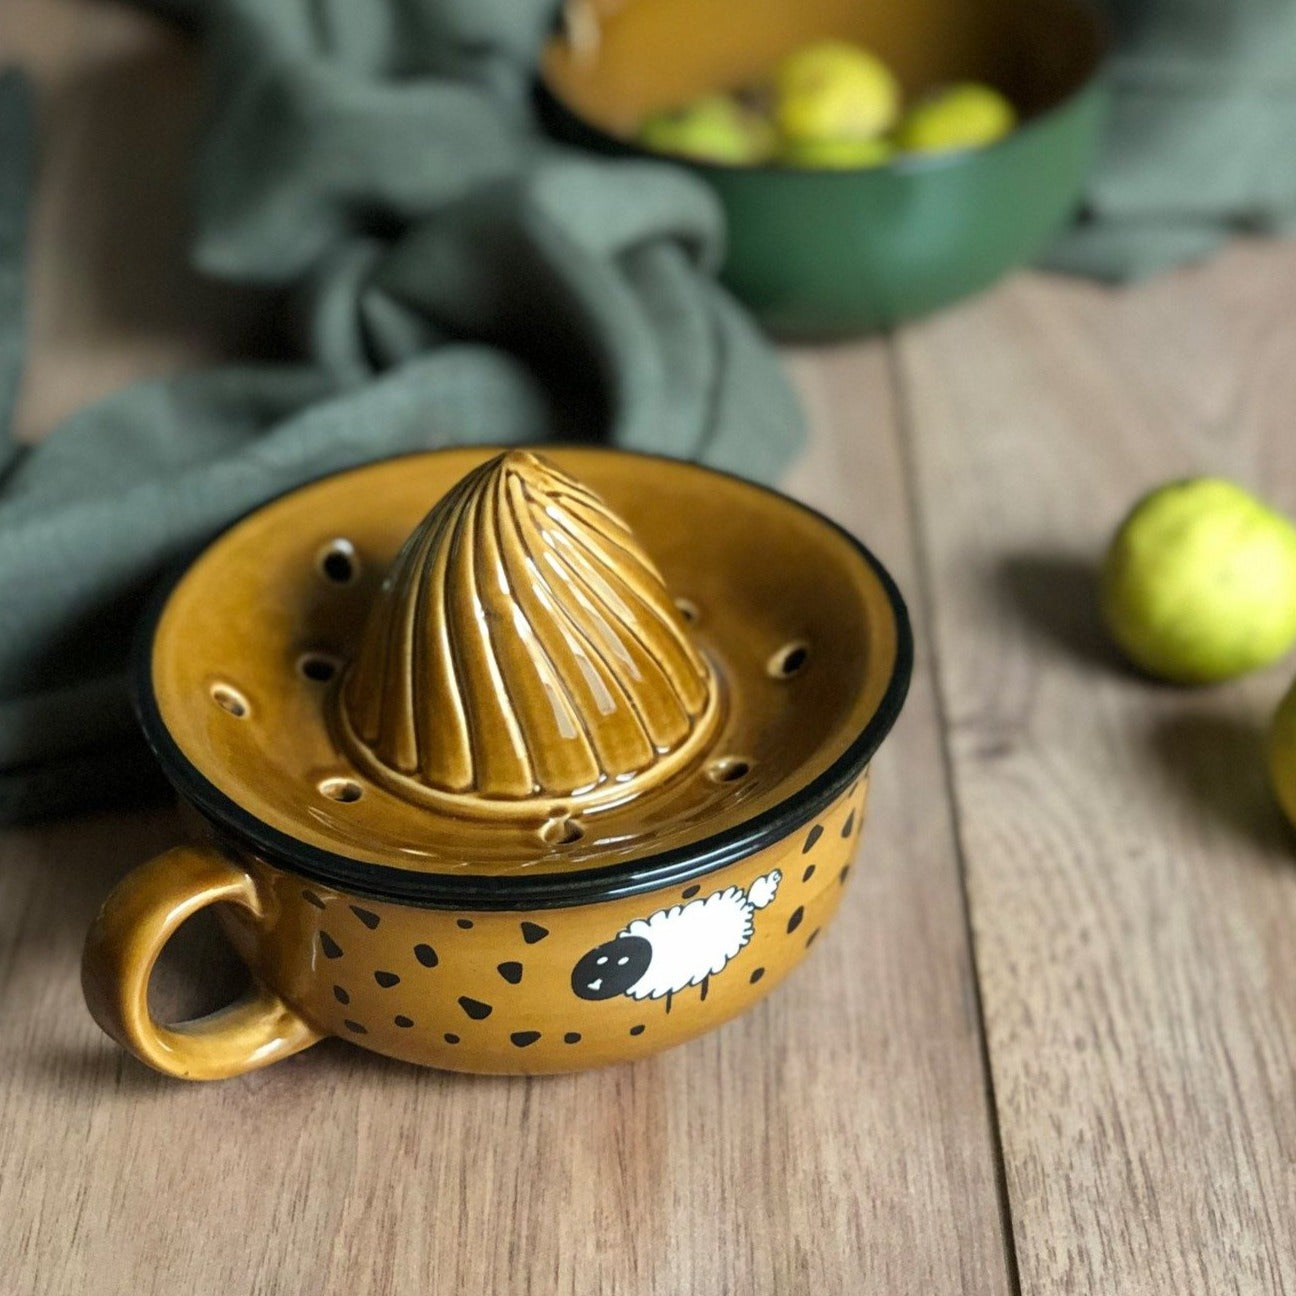 Handmade ceramic juicer, made in India